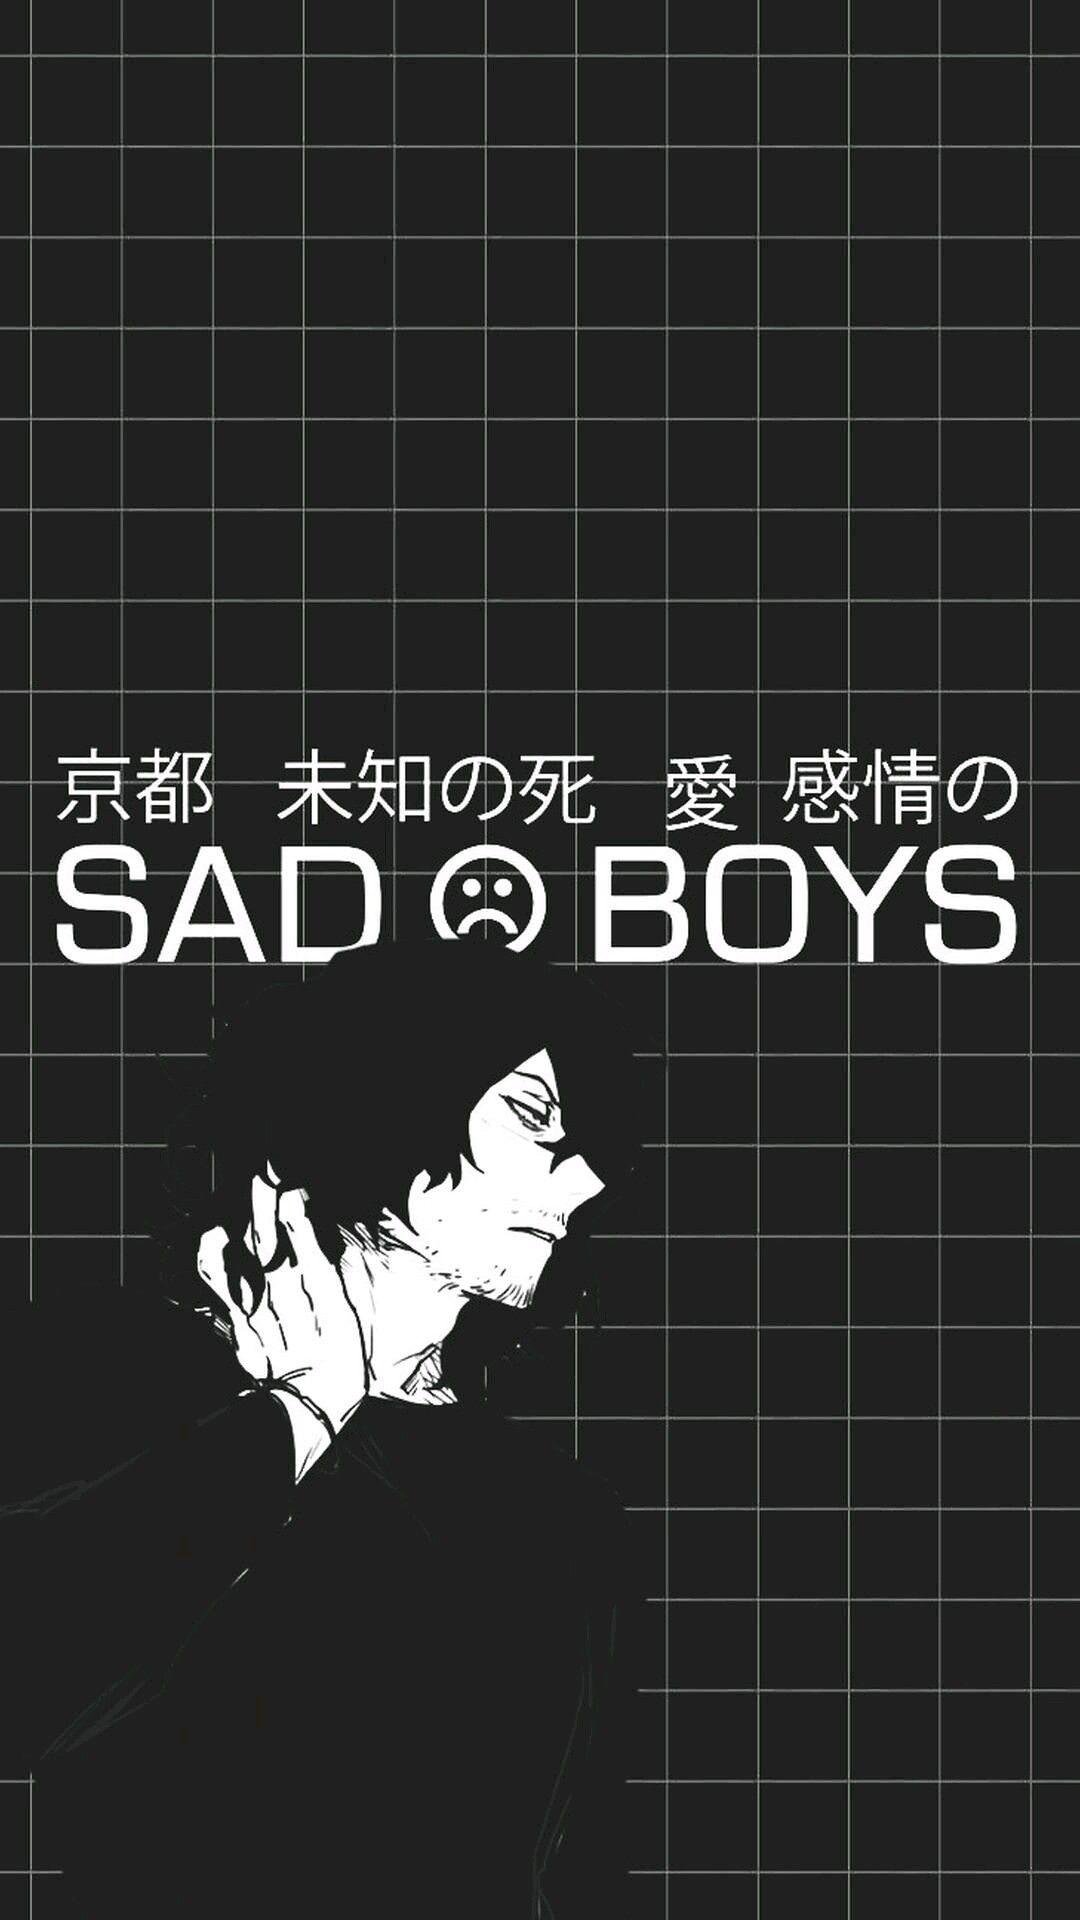 Anime Boy Hair in Black | Roblox Wiki | Fandom